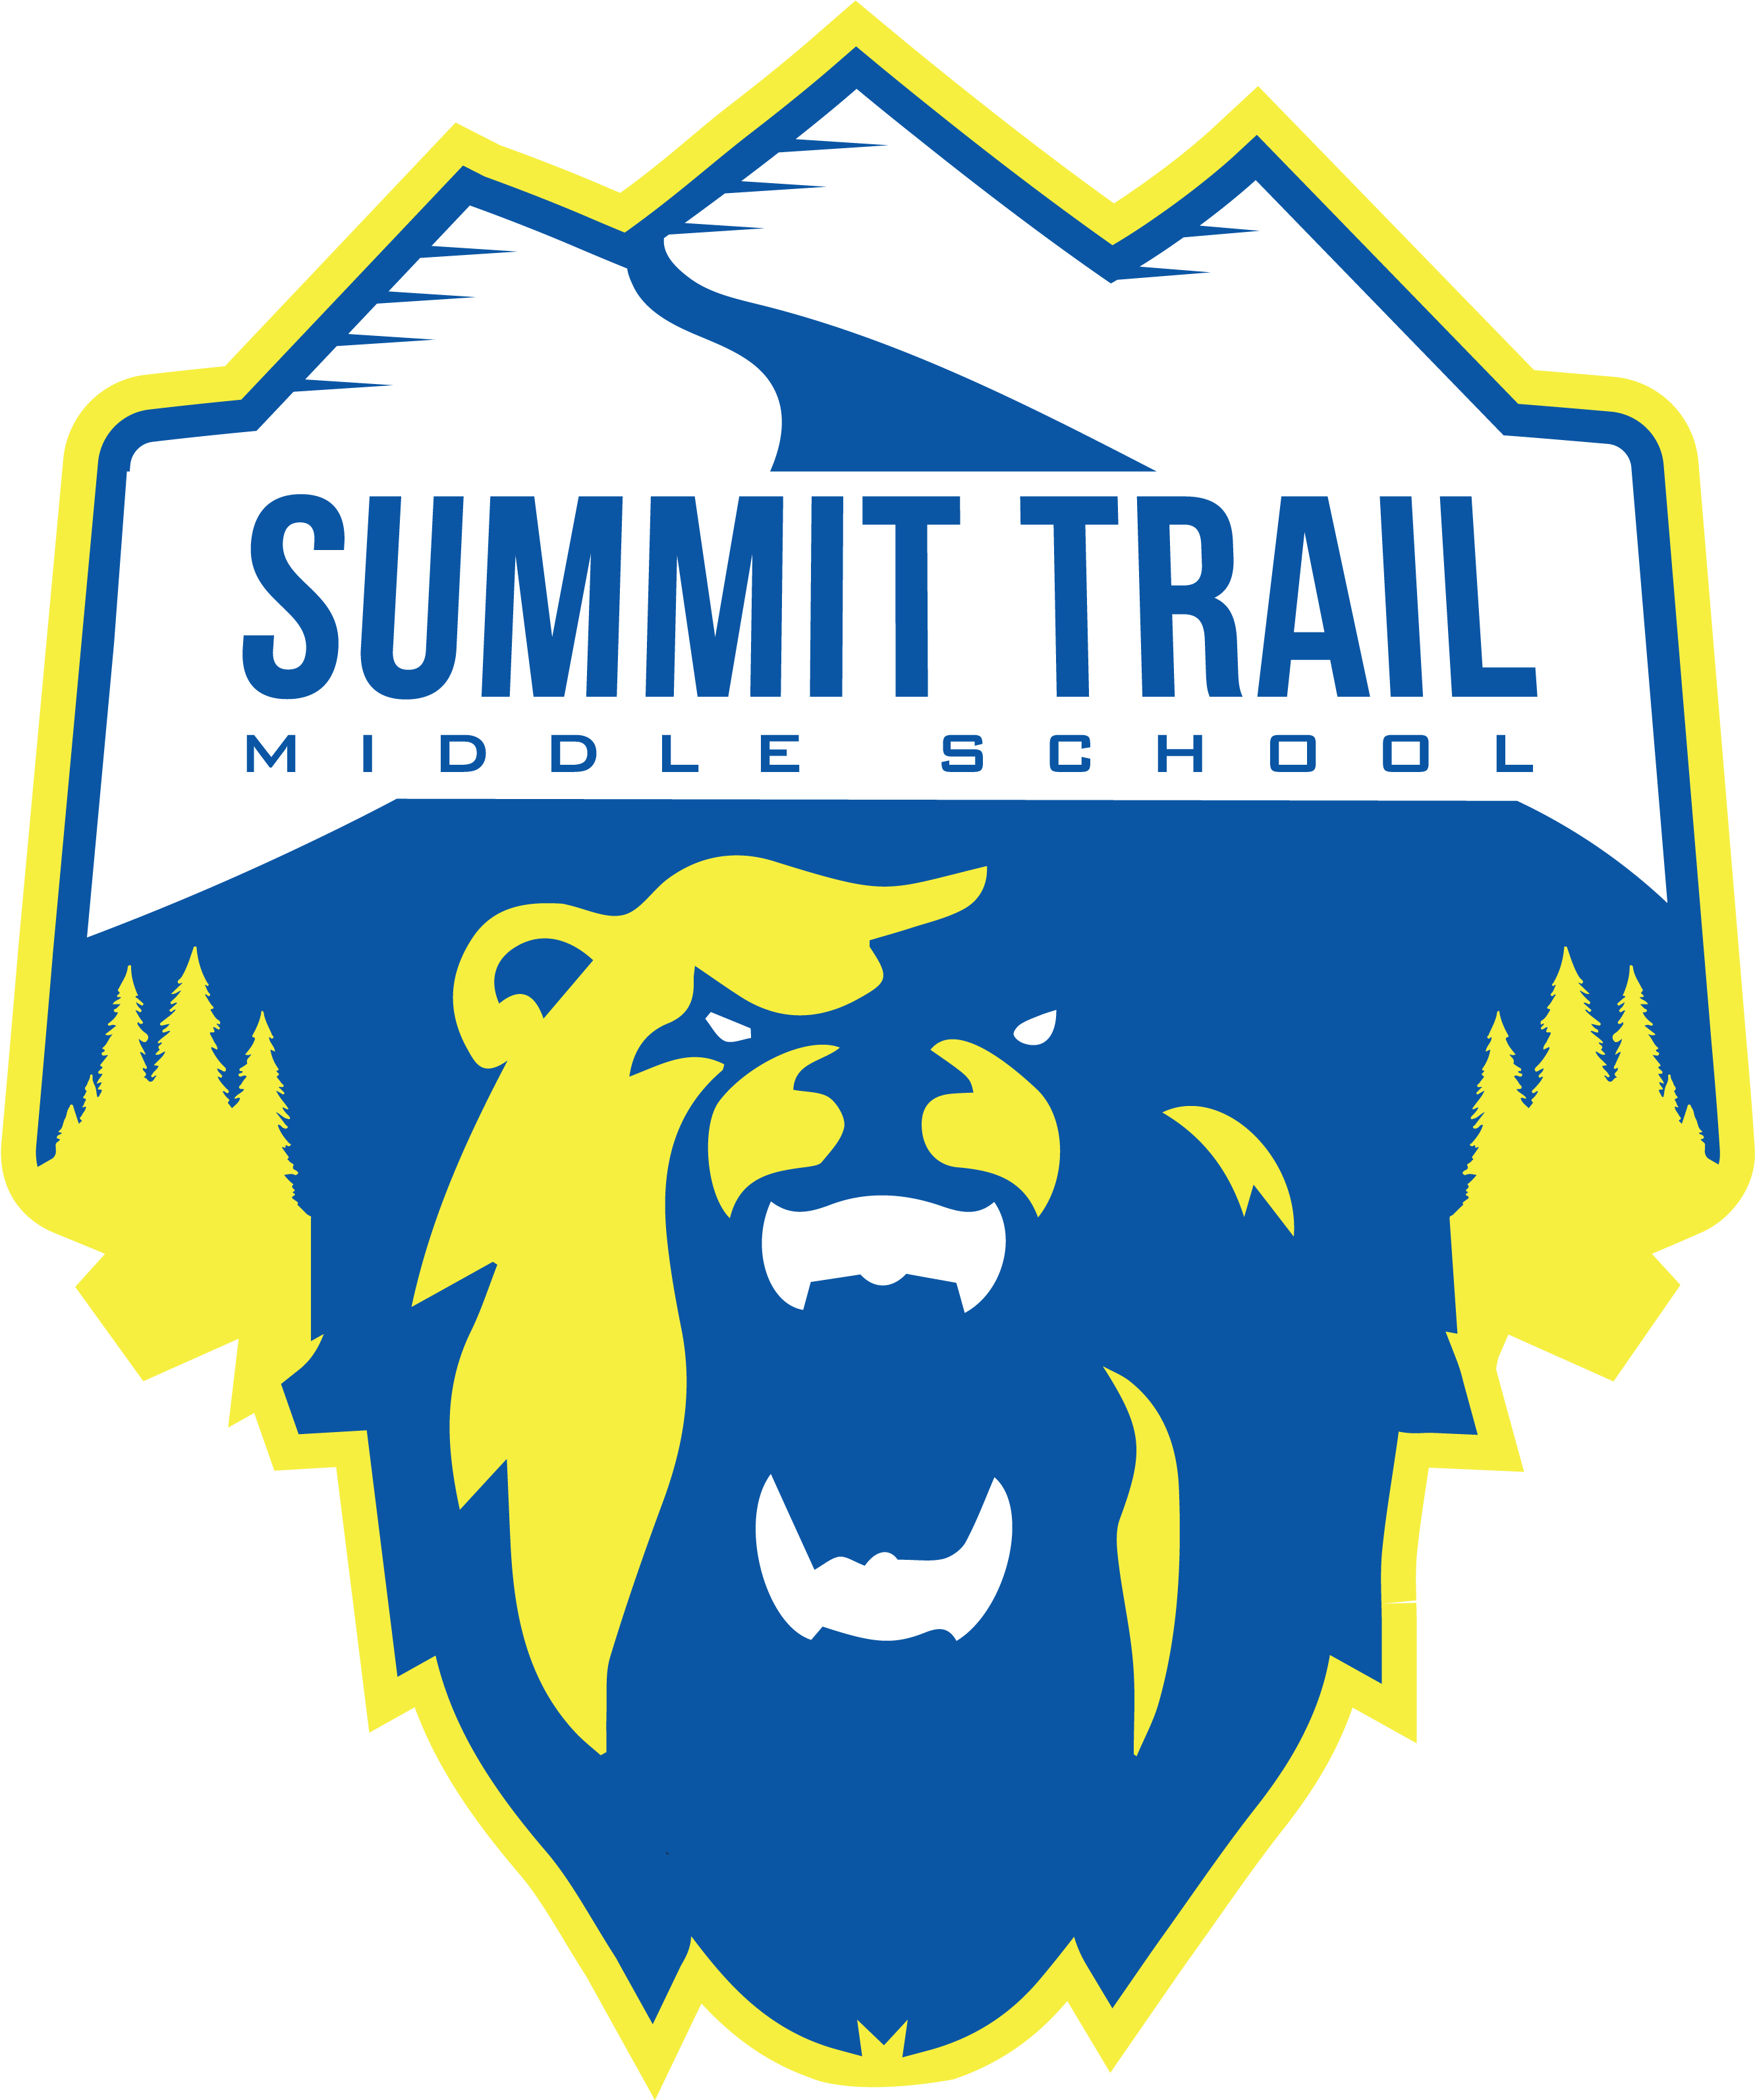 Summit Trail Middle School - Summit Trail Middle School (2670x3187)